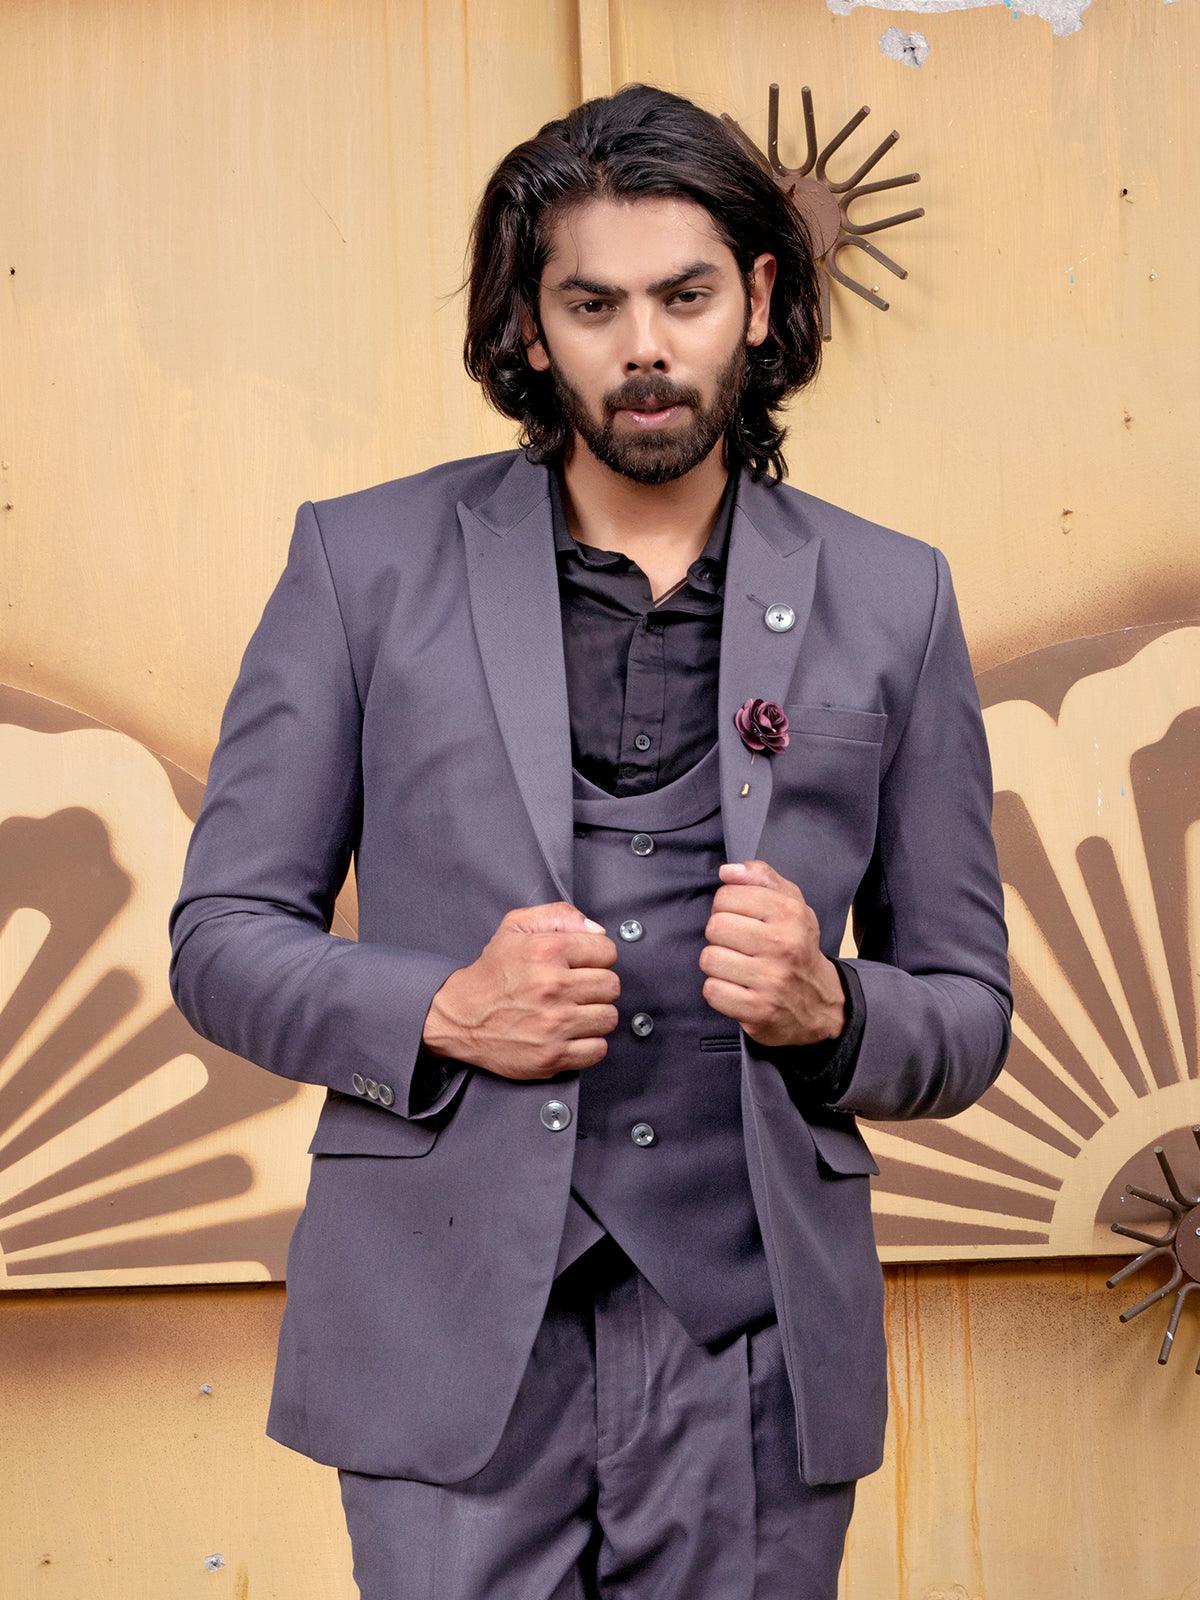 Black Salwar Suit  Buy Black Salwar Suit online in India